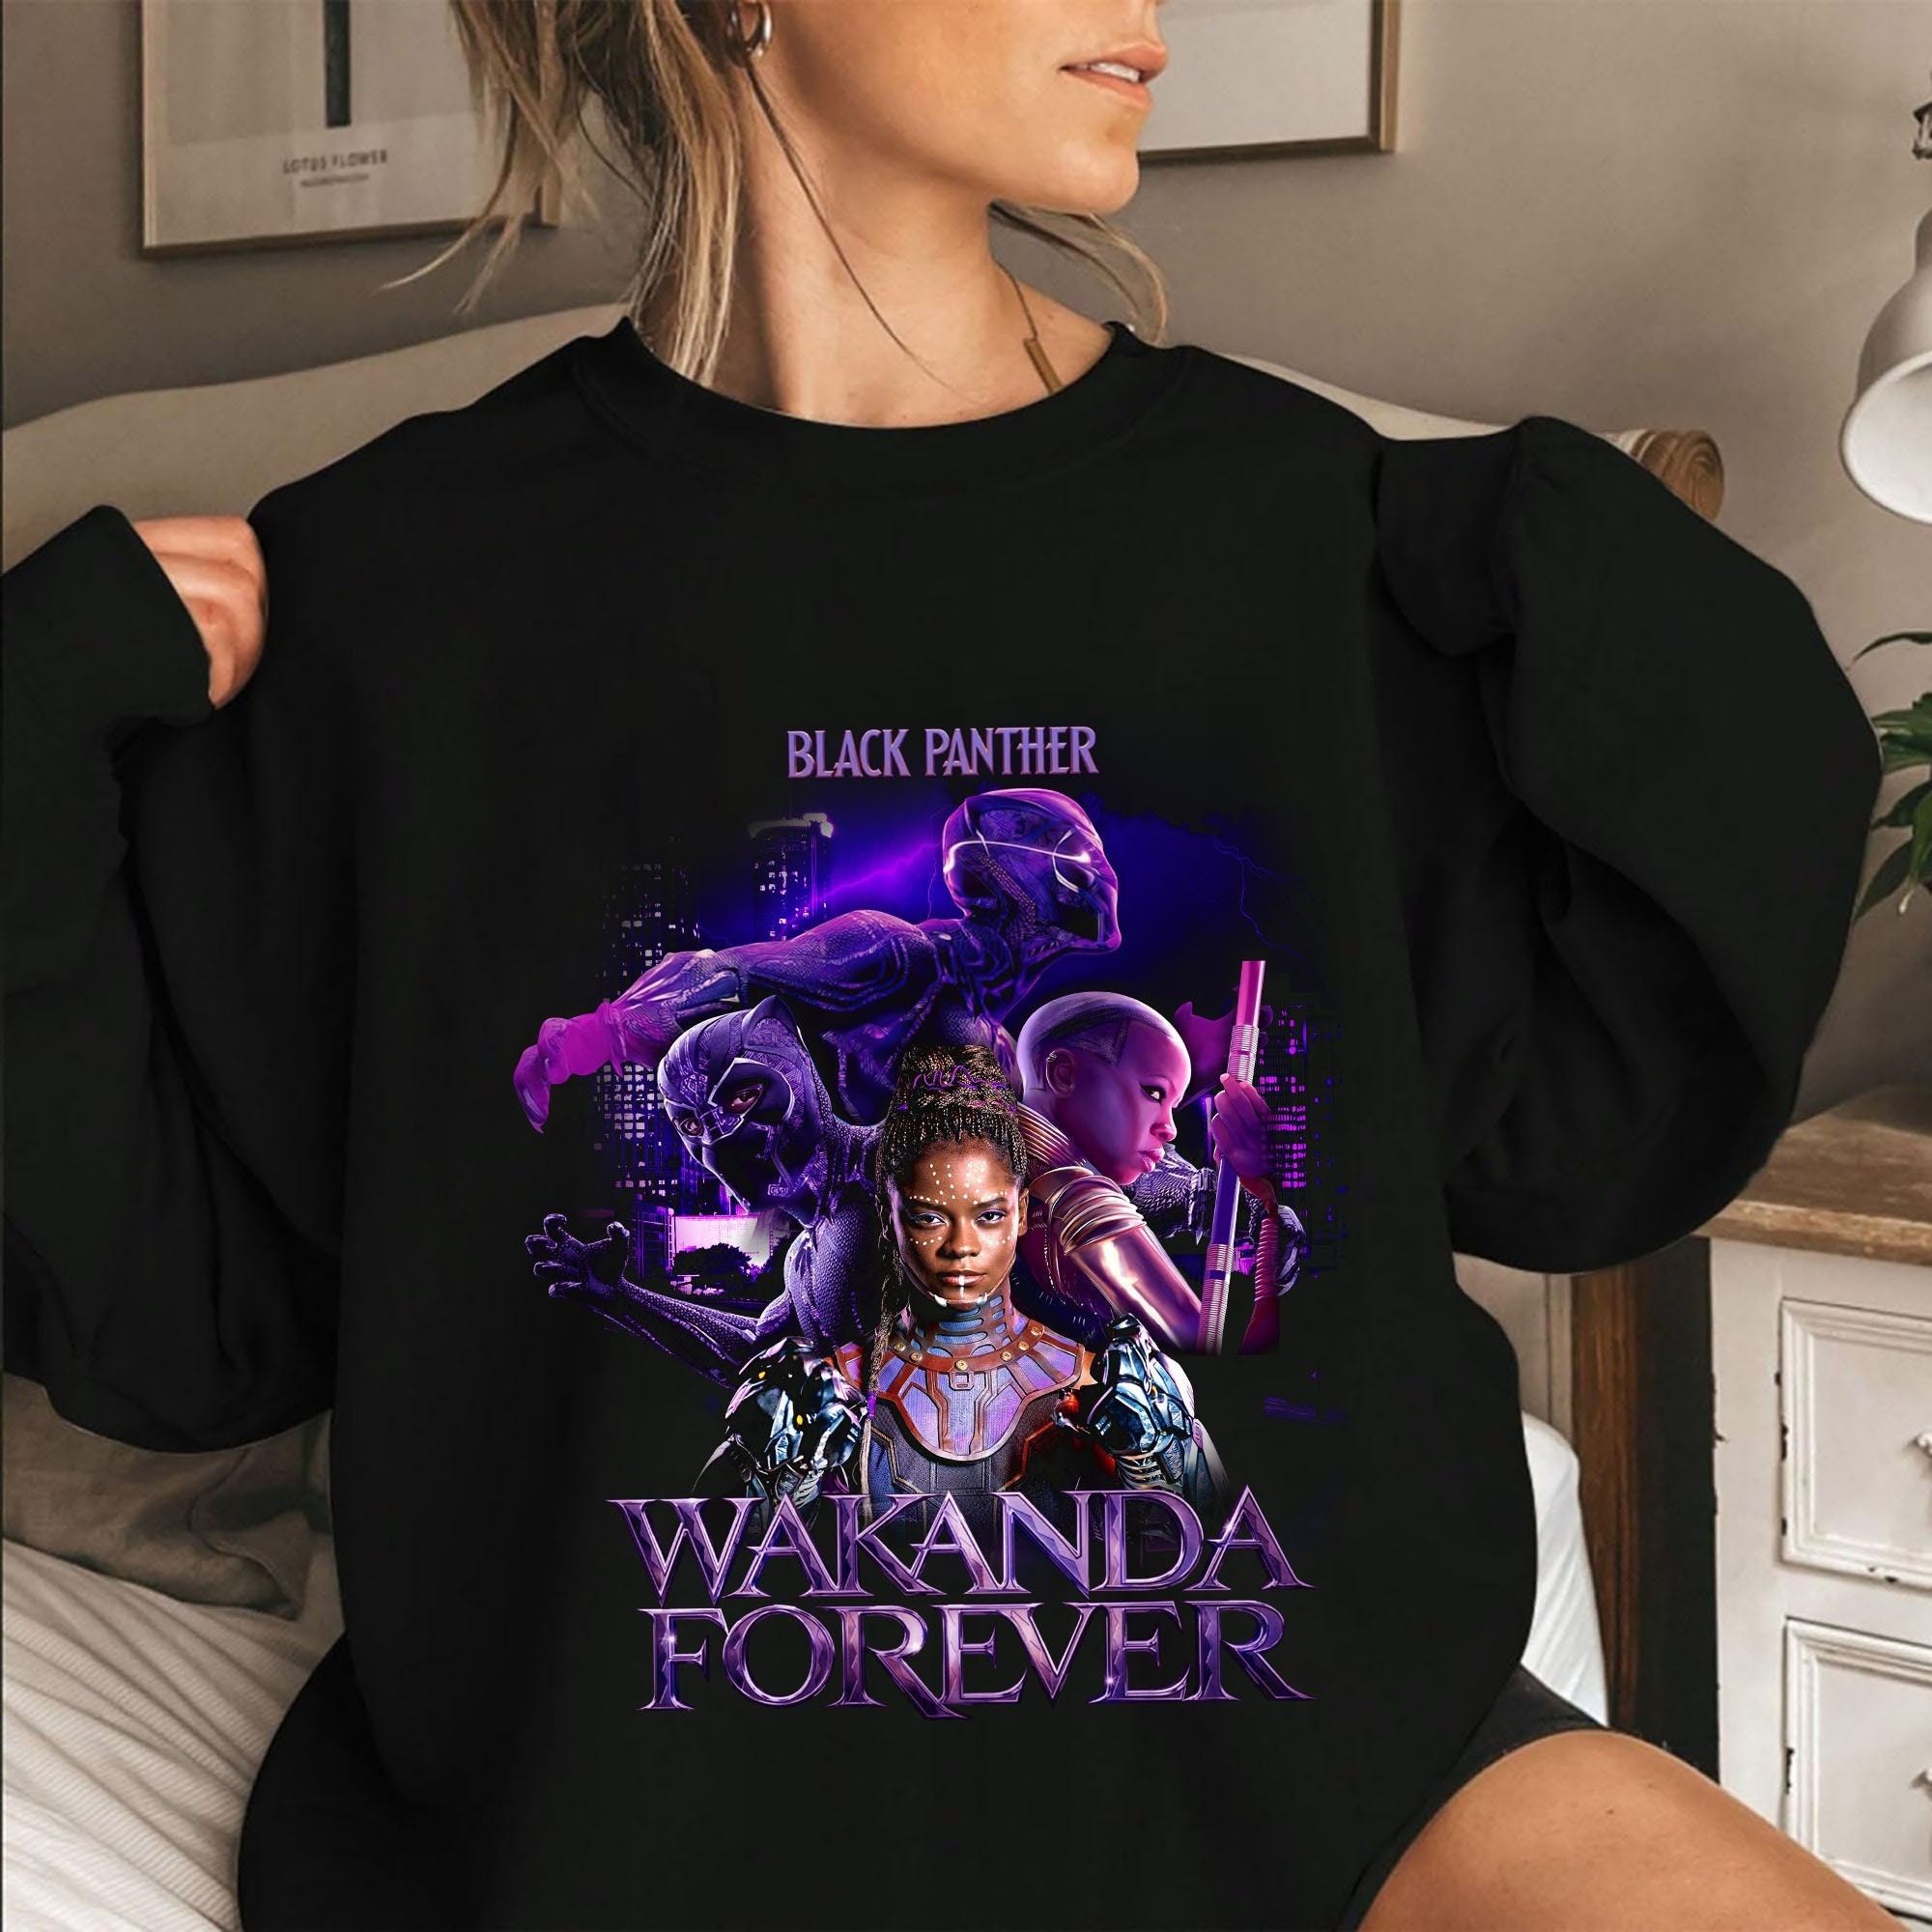 Discover Sudadera Wakanda Para Siempre Wakanda Forever Vintage Unisex